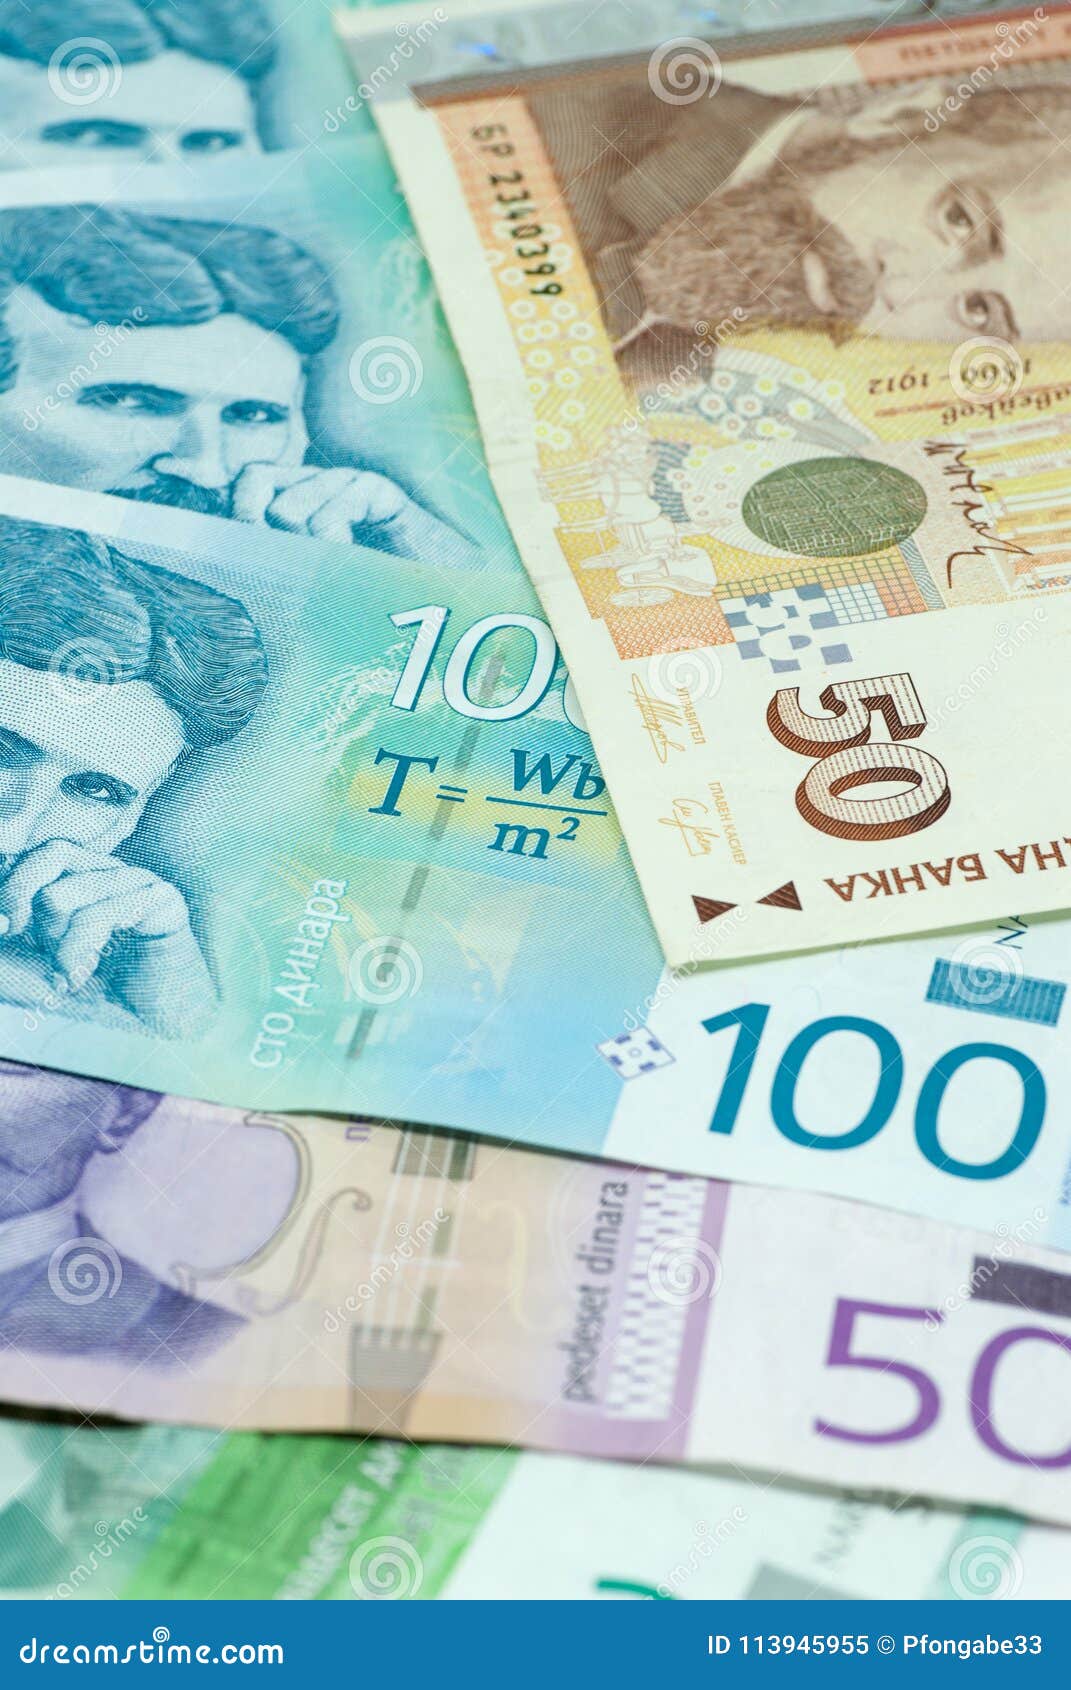 Various Banknotes Of Serbian Dinar And Bulgarian Leva Bilateral - 